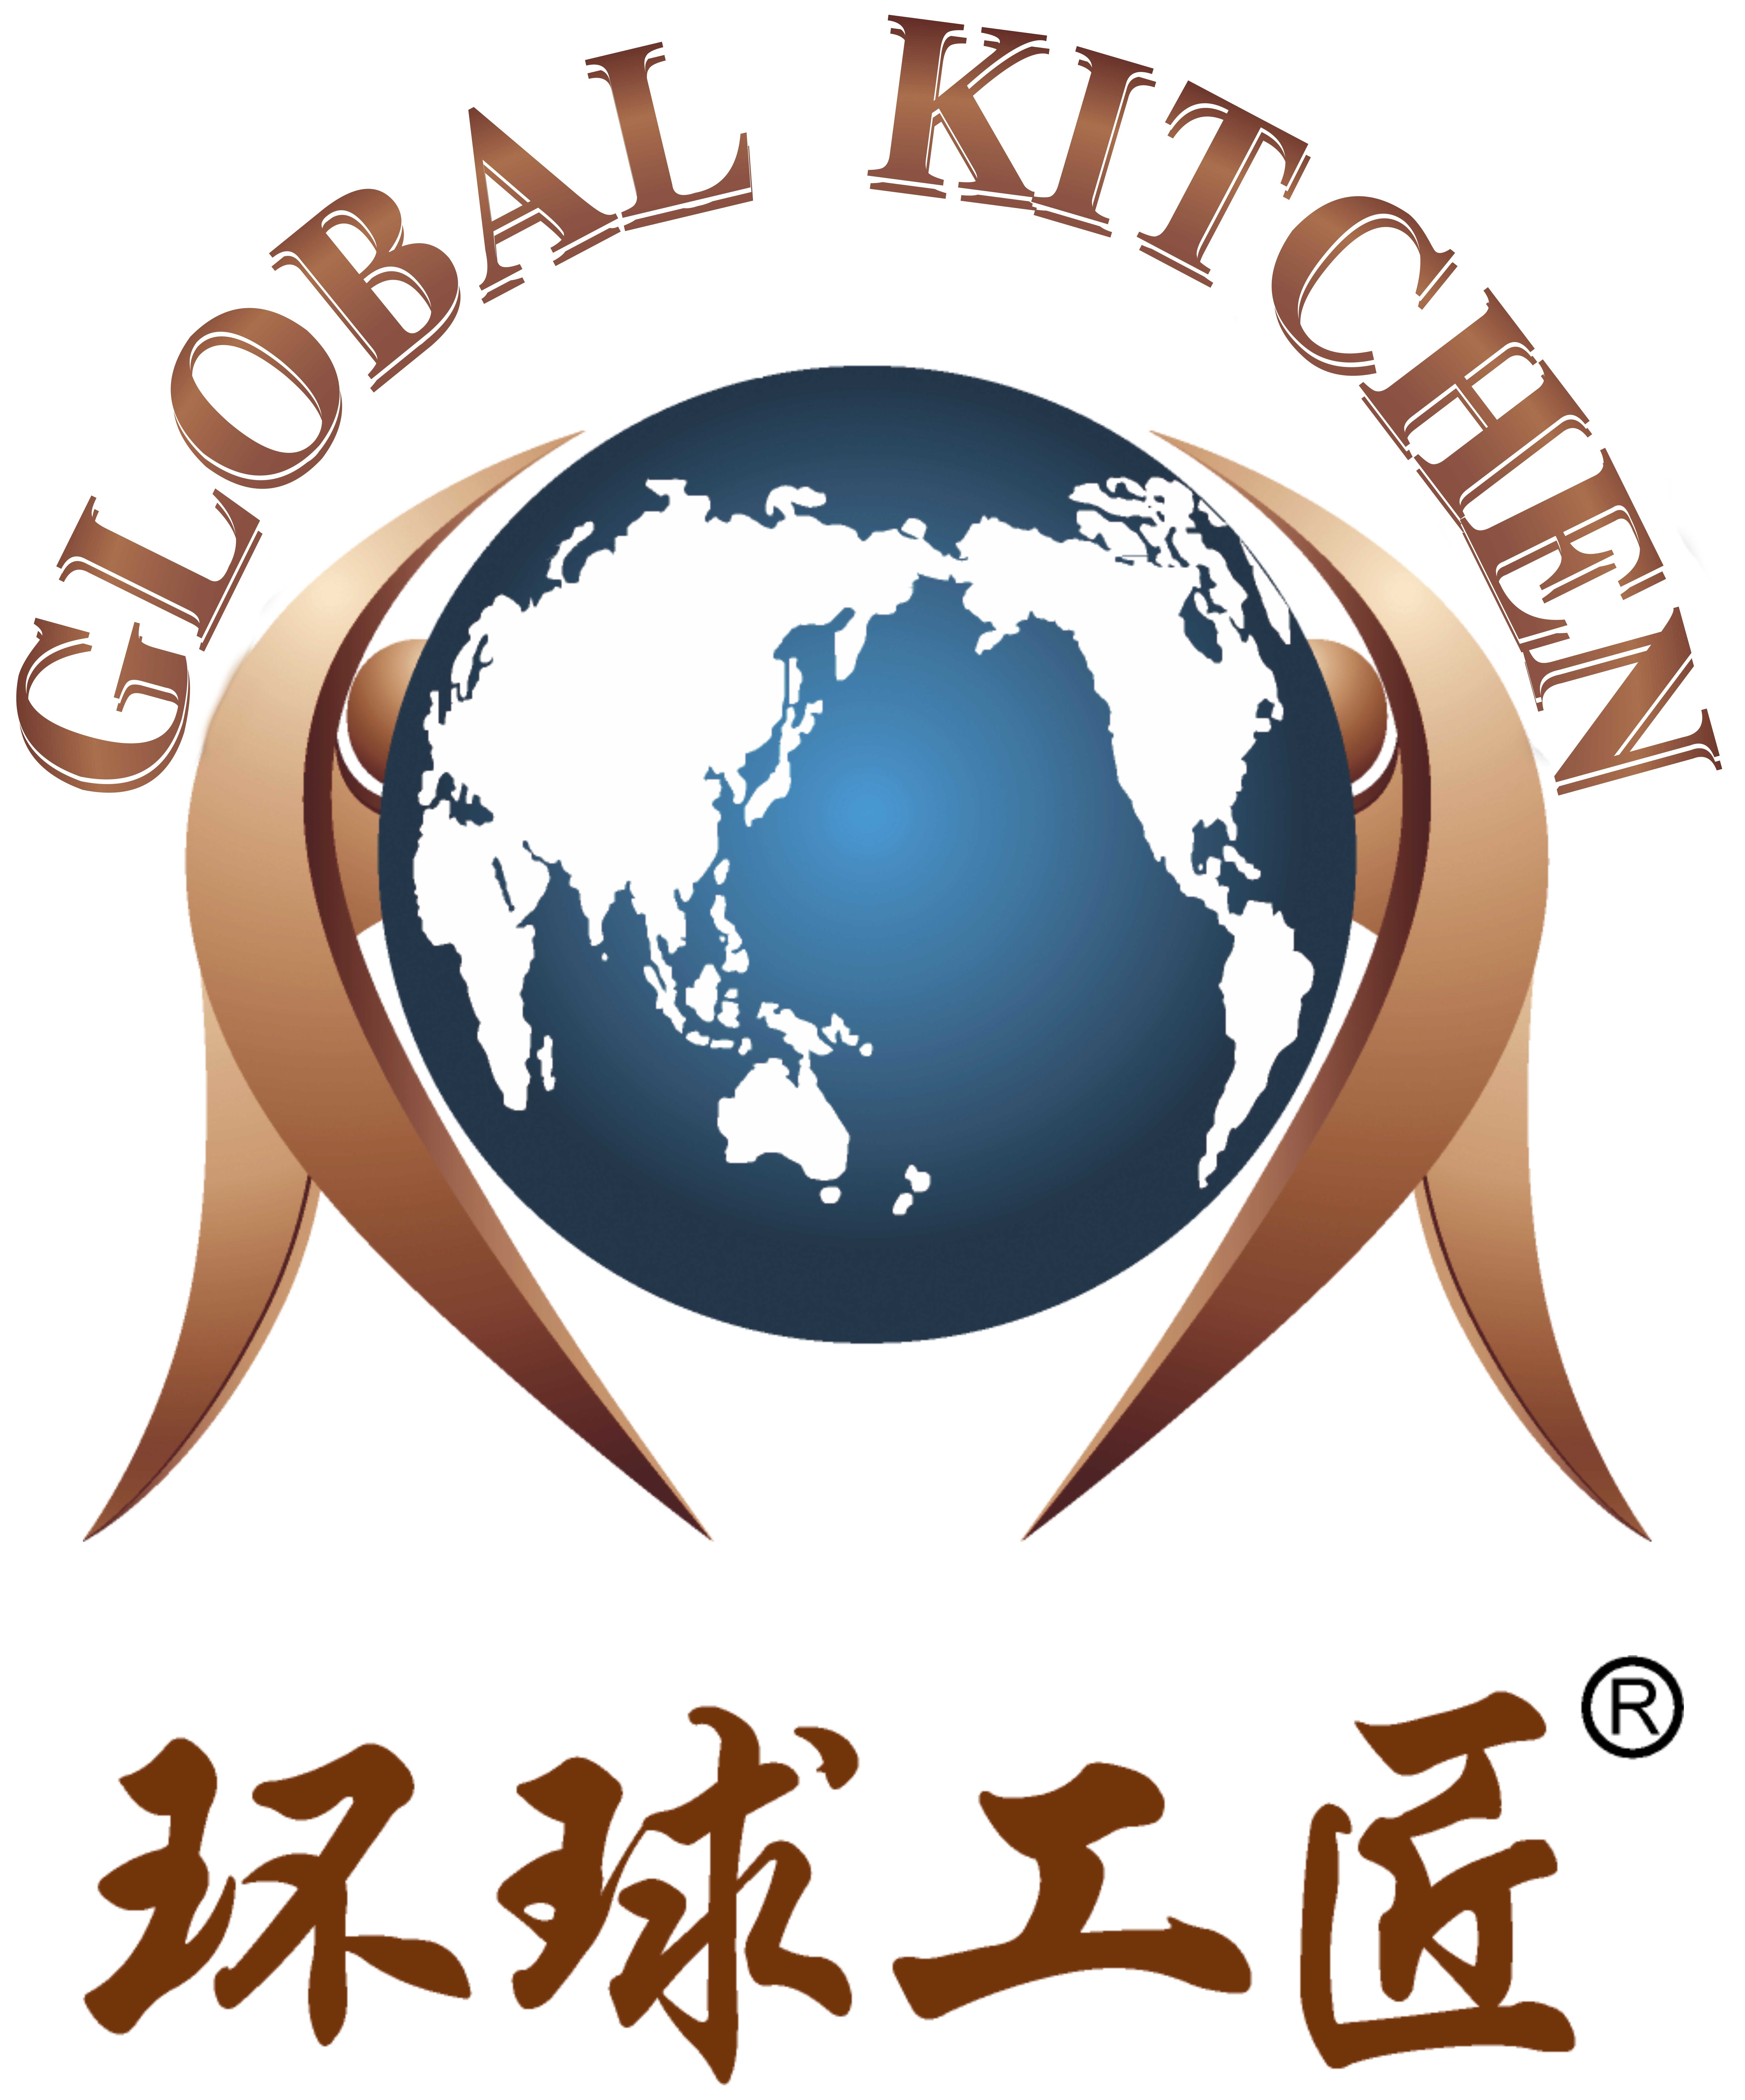  Global Kitchen Co.,Ltd